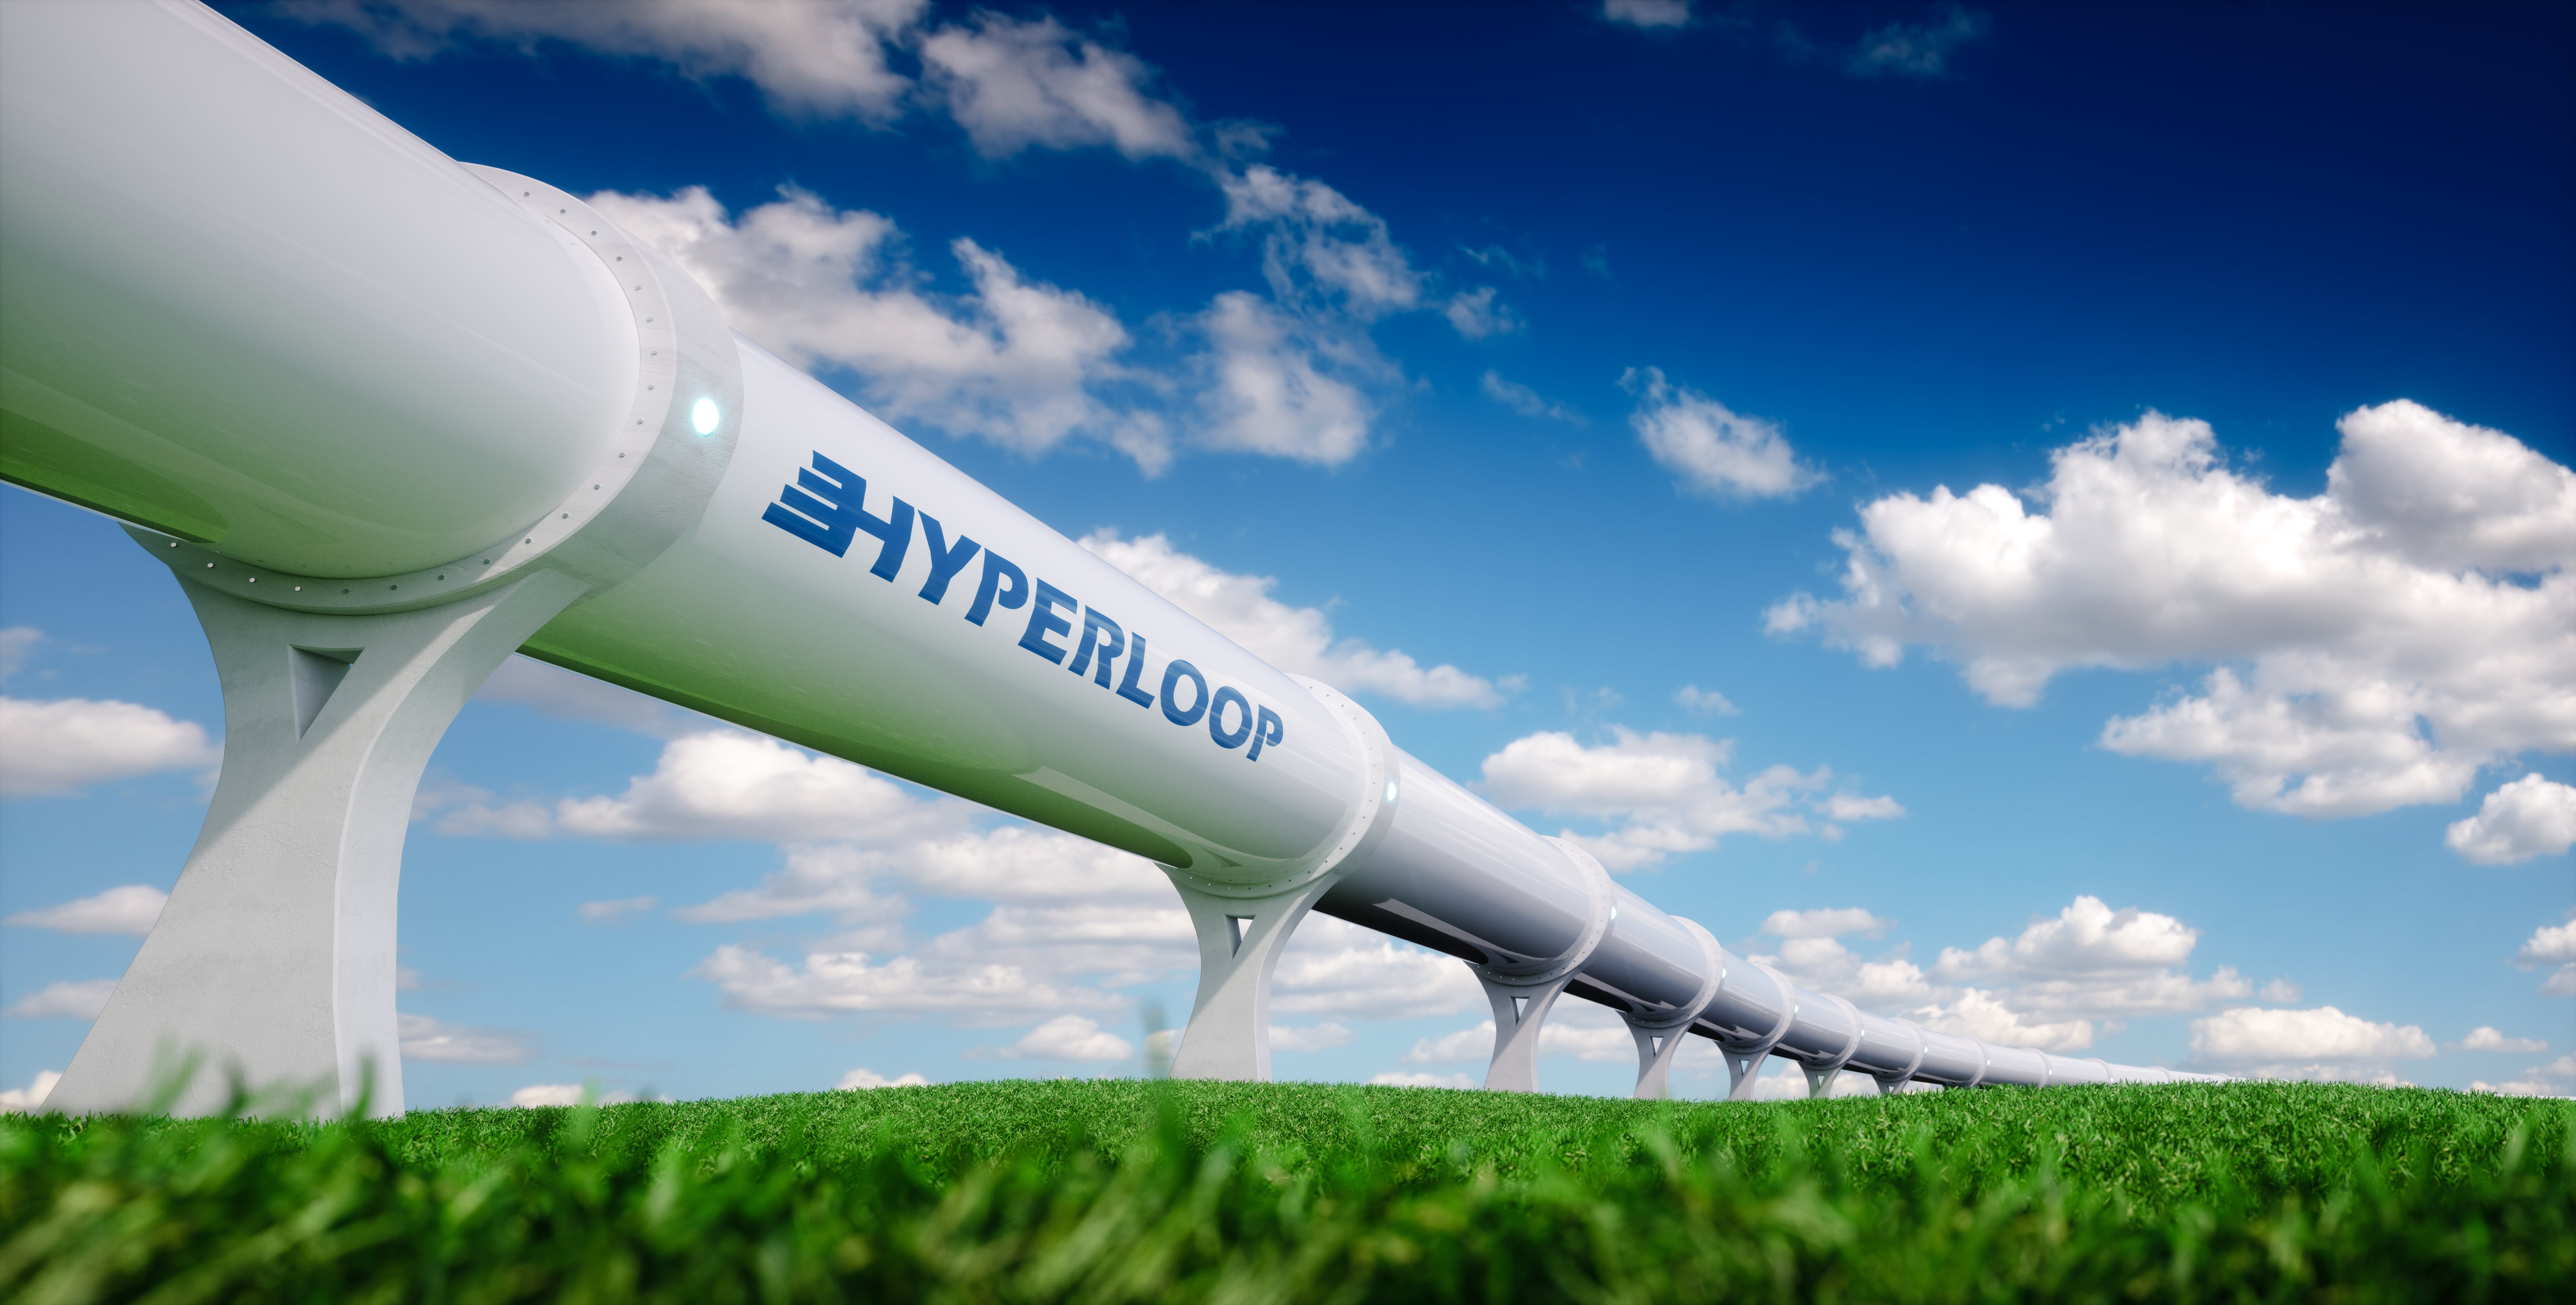 hyperloop-image-min.jpeg